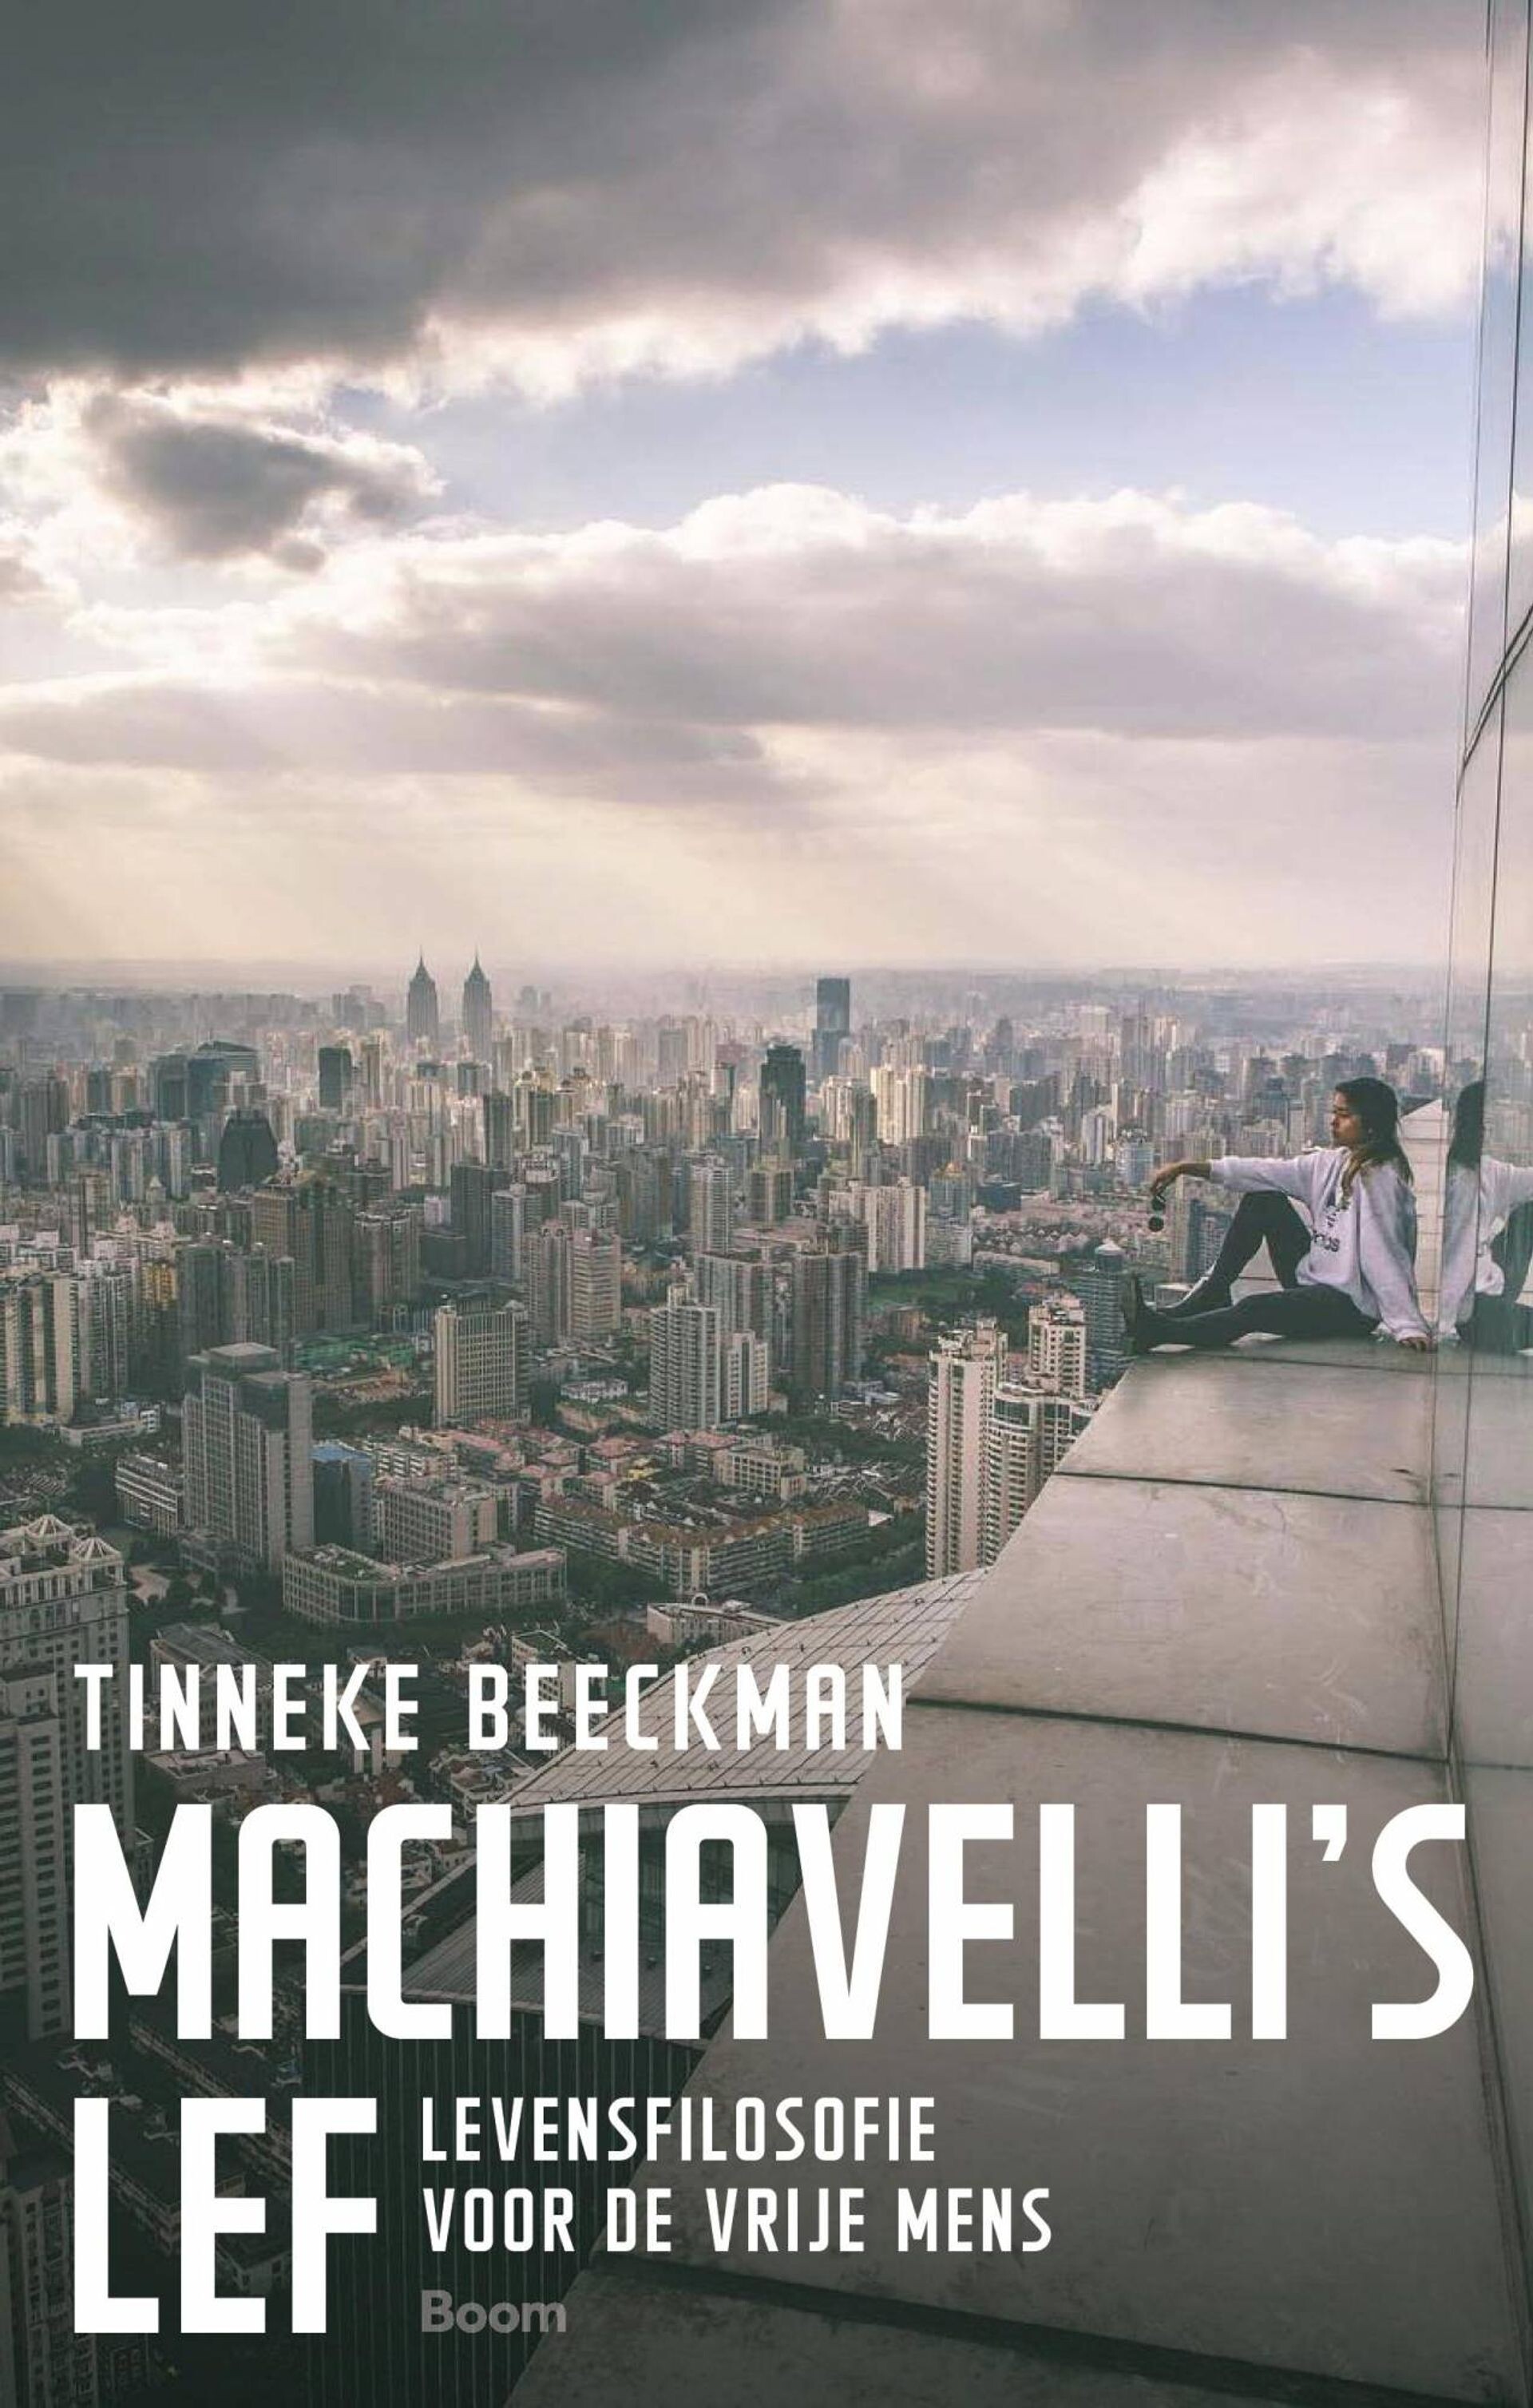 #582 - Tinneke Beeckman over 'Machiavelli's lef'